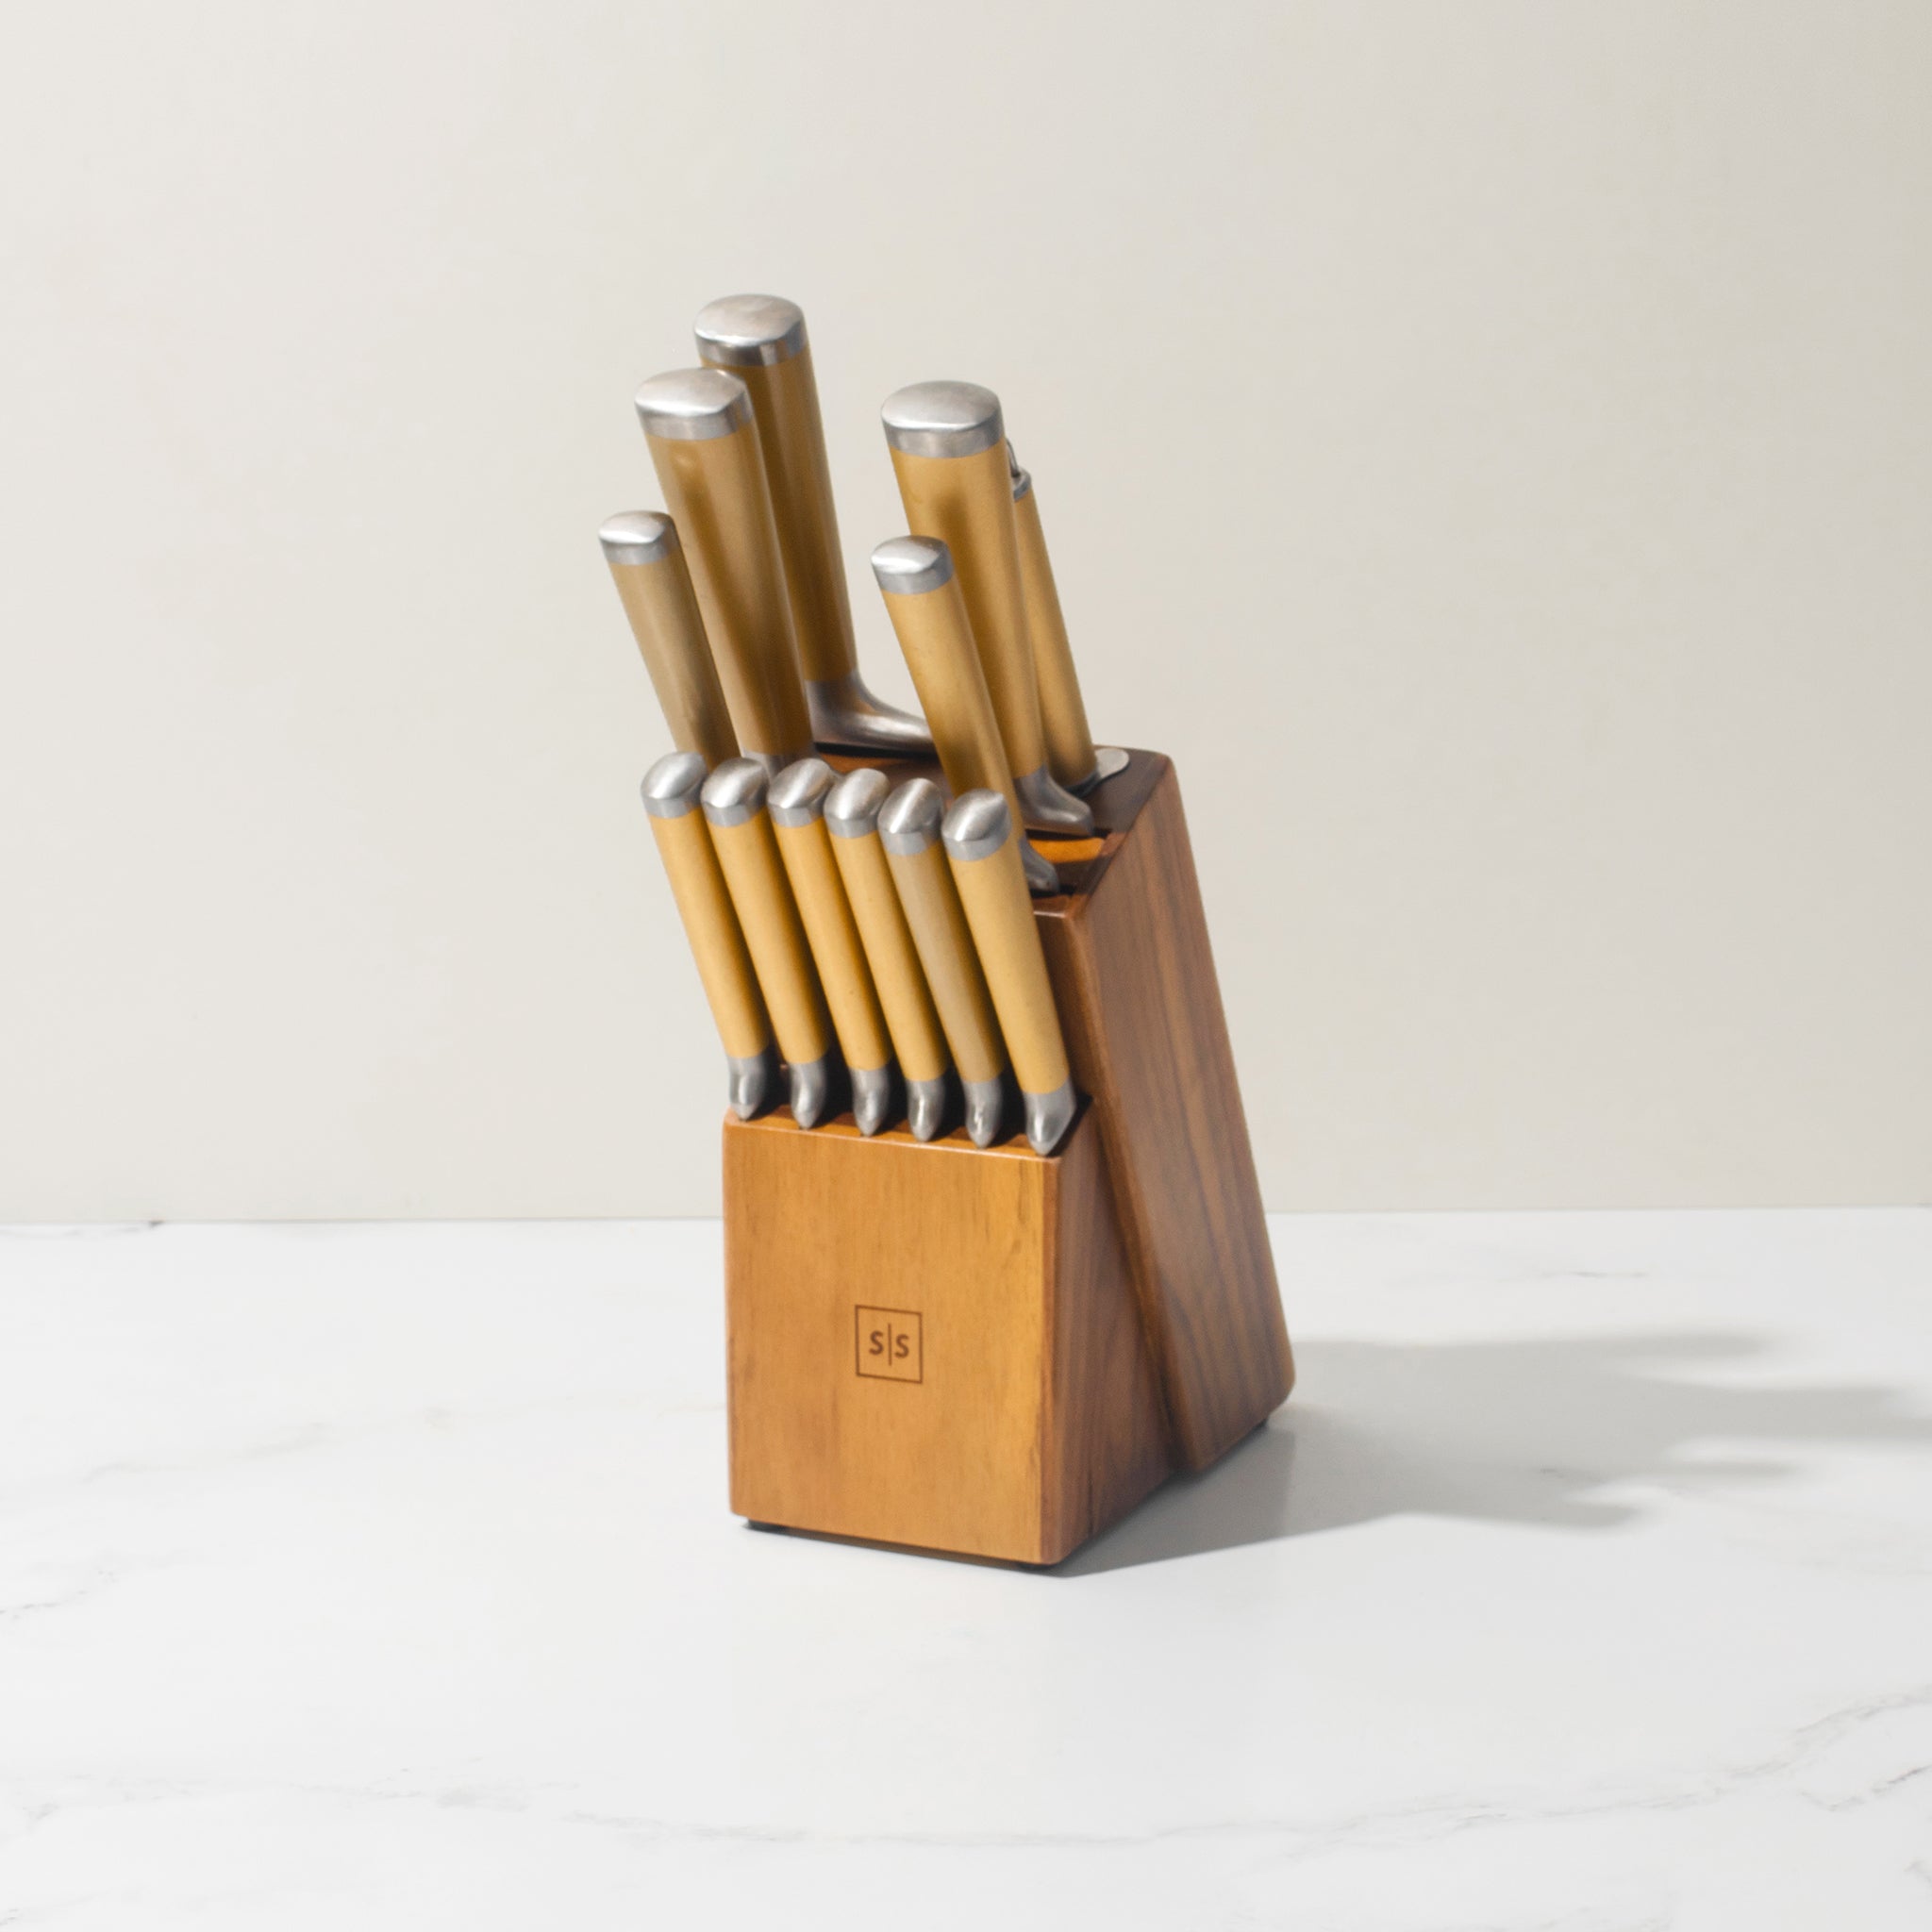 Gold Knife Set with Walnut Knife Block - Styled Settings